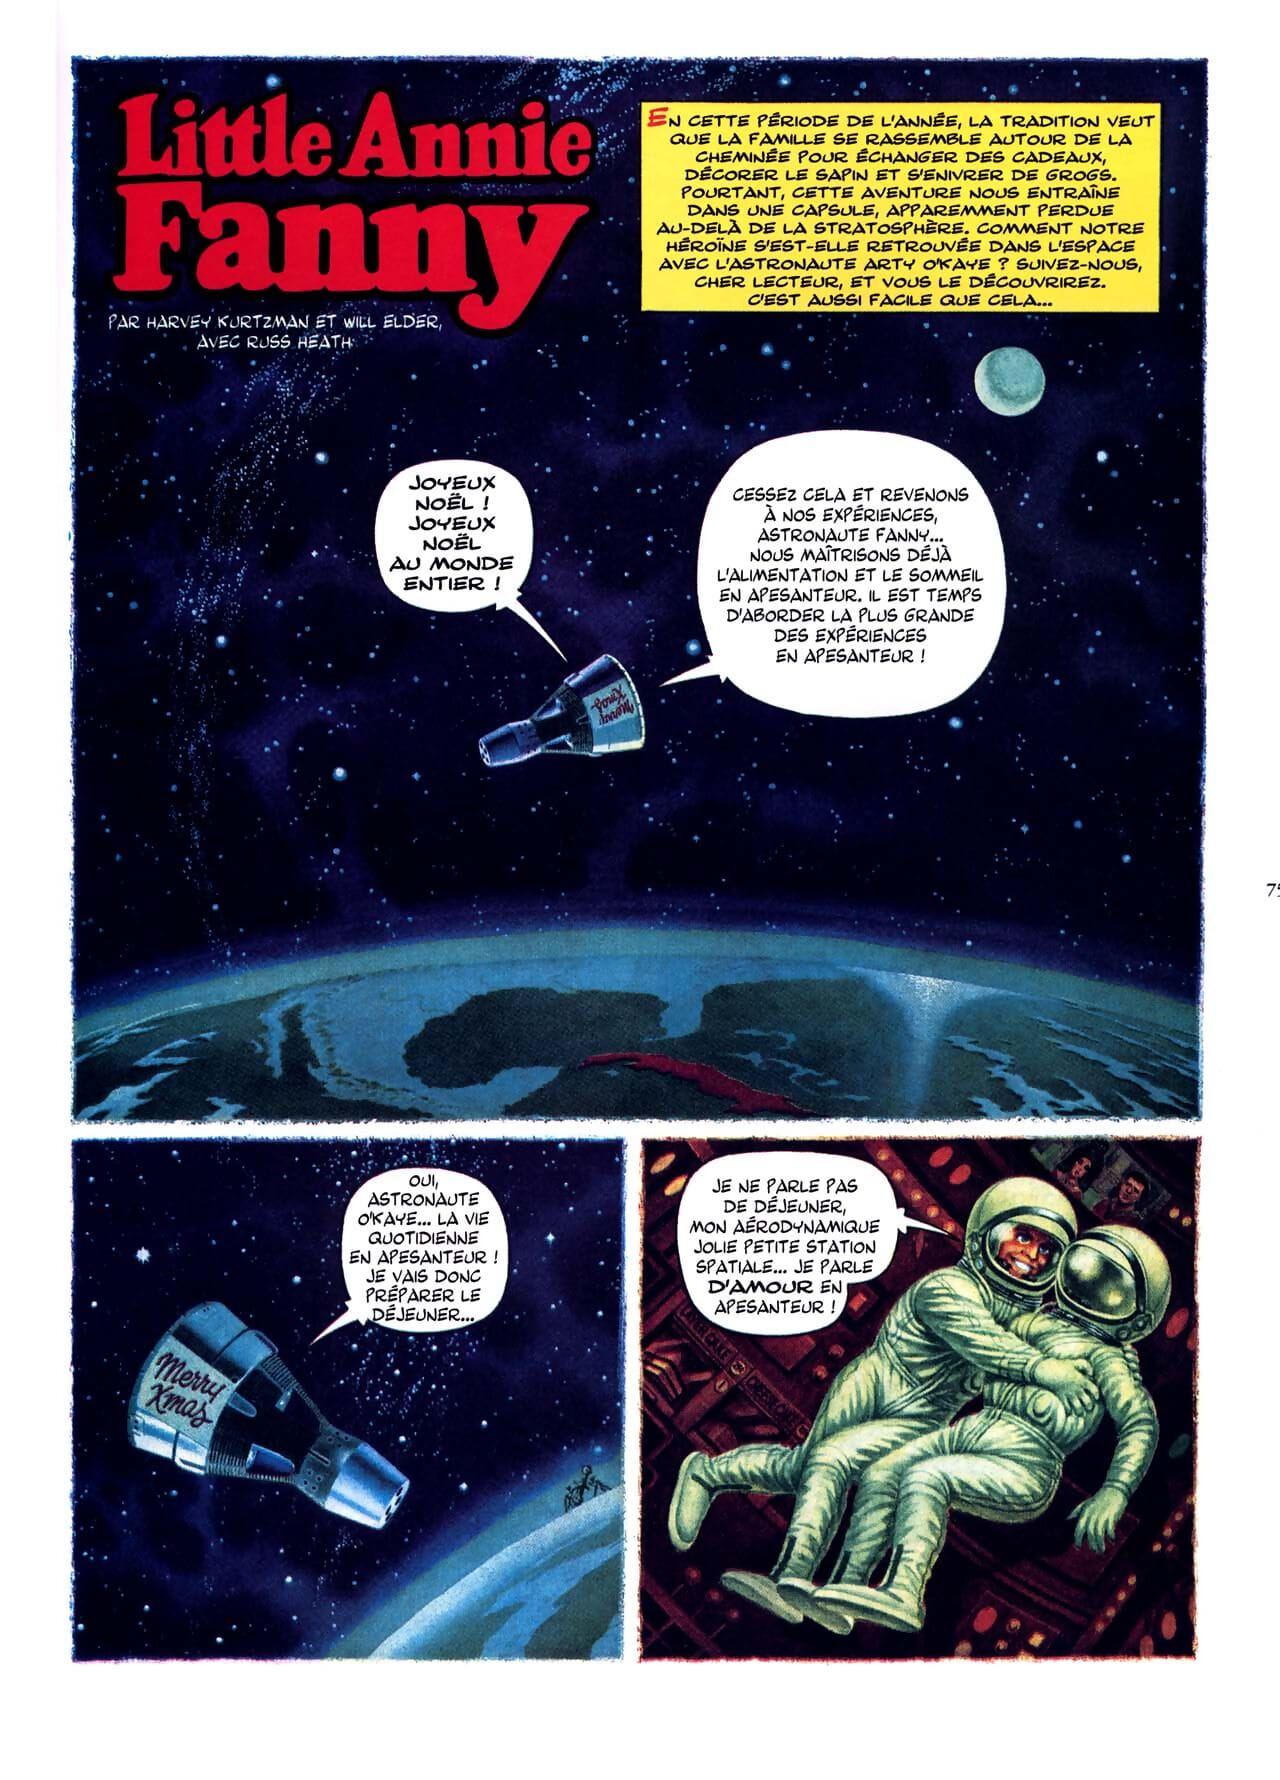 Nhỏ annie fanny vol 1 - 1962-1965 - phần 4 page 1